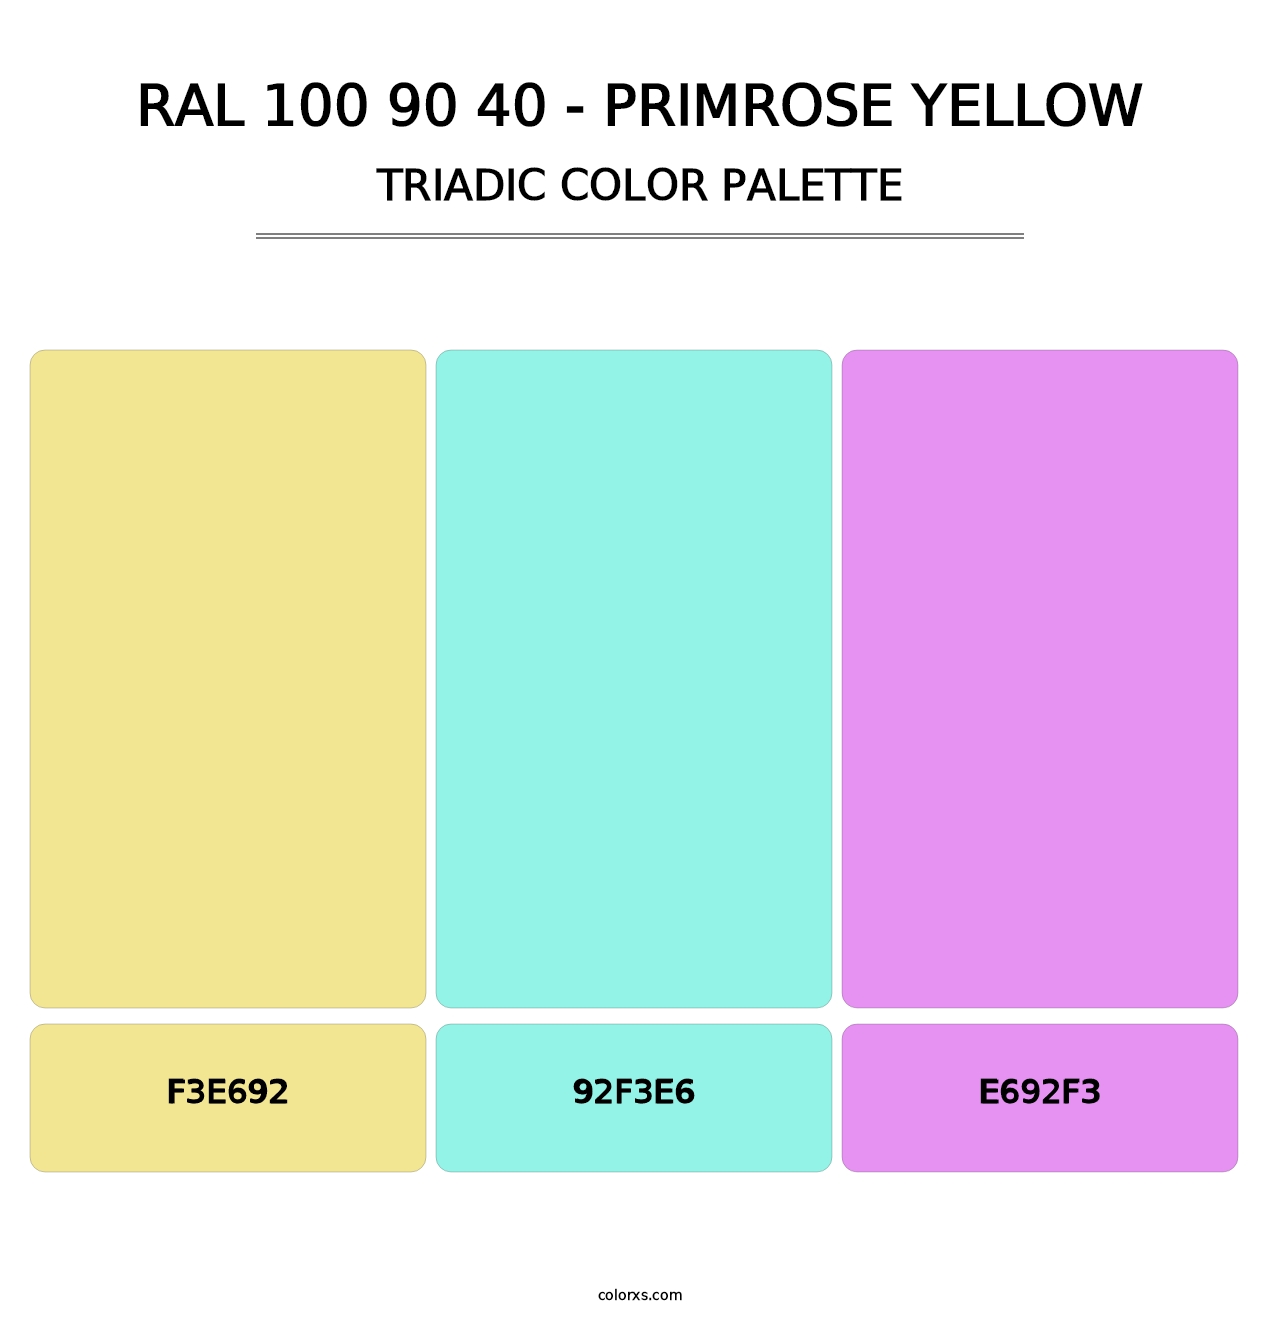 RAL 100 90 40 - Primrose Yellow - Triadic Color Palette